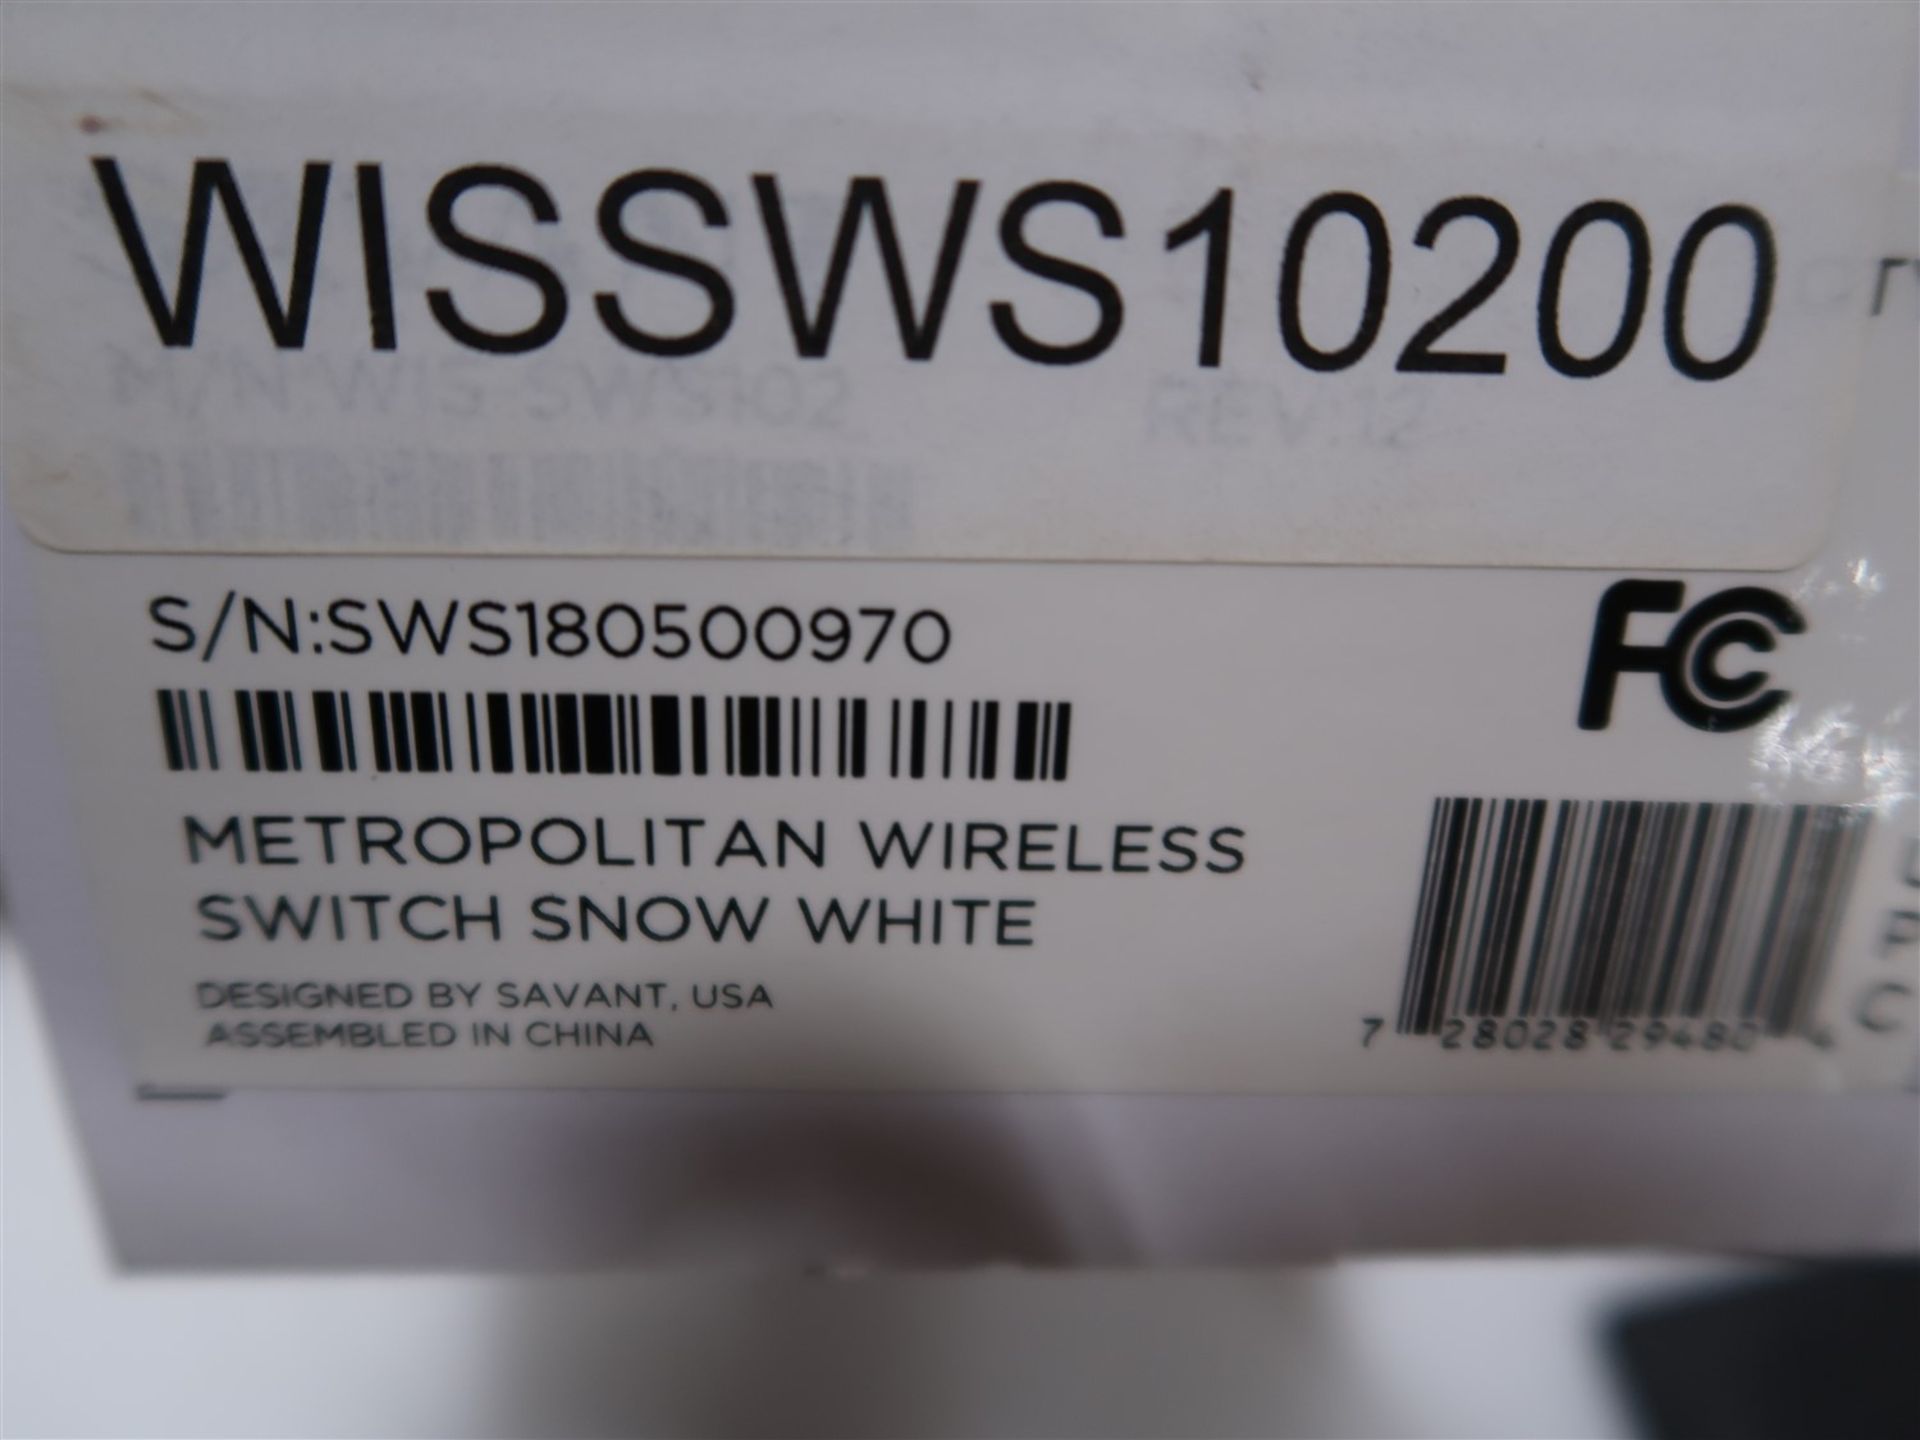 SAVANT METROPOLITAN WIRELESS SWITCH SNOW WHITE MOD. WISSWS10200 - Image 2 of 2